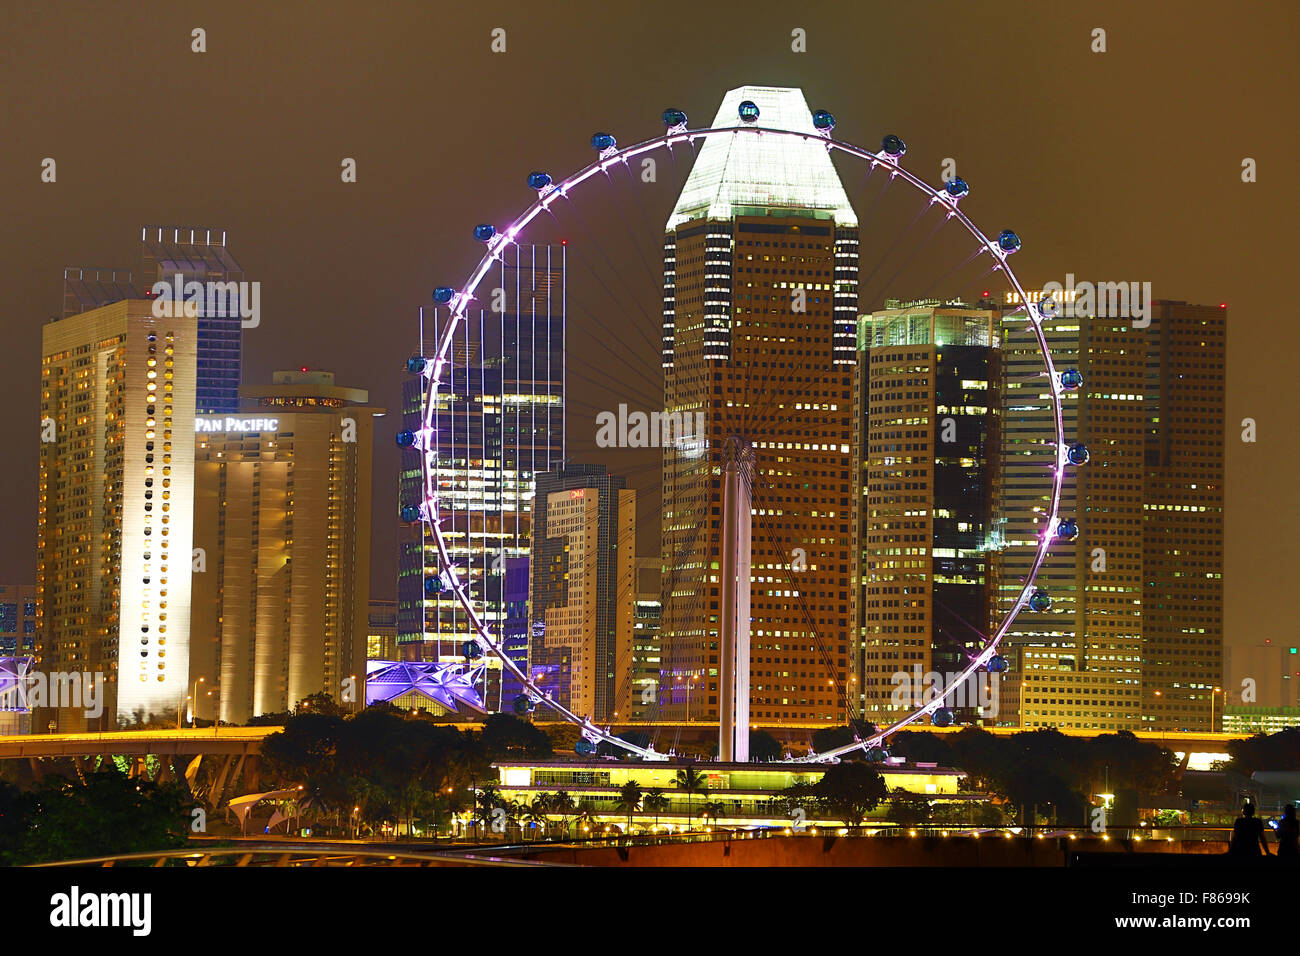 Singapore Flyer Beobachtung Rad, Singapur, Republik Singapur Stockfoto